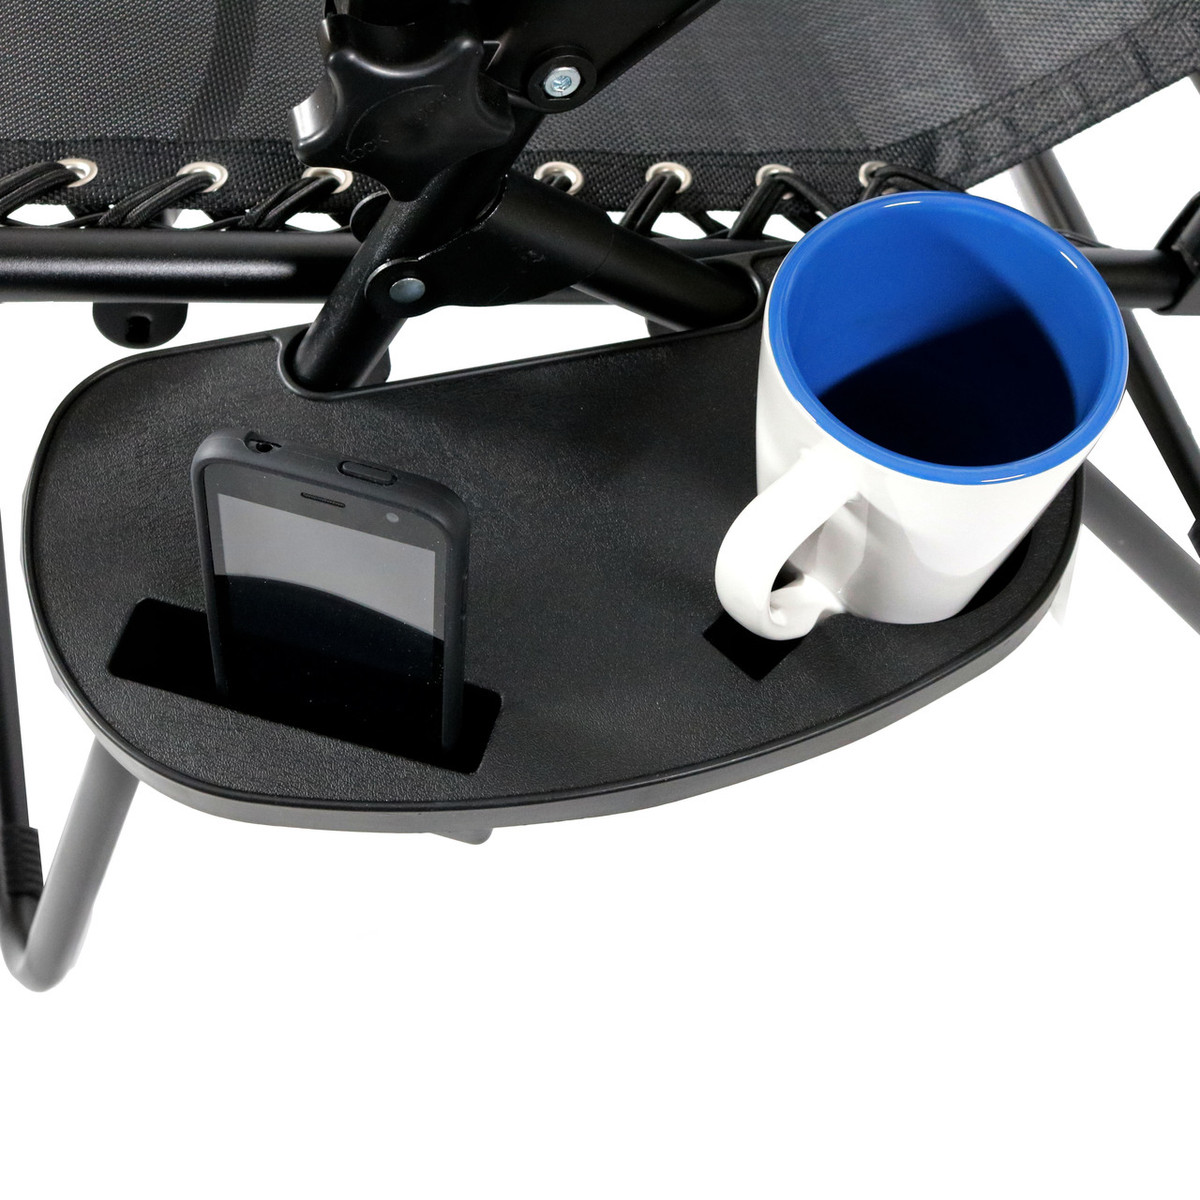 Sunnydaze Zero Gravity Chair Cup Holder Mobile Device Slot